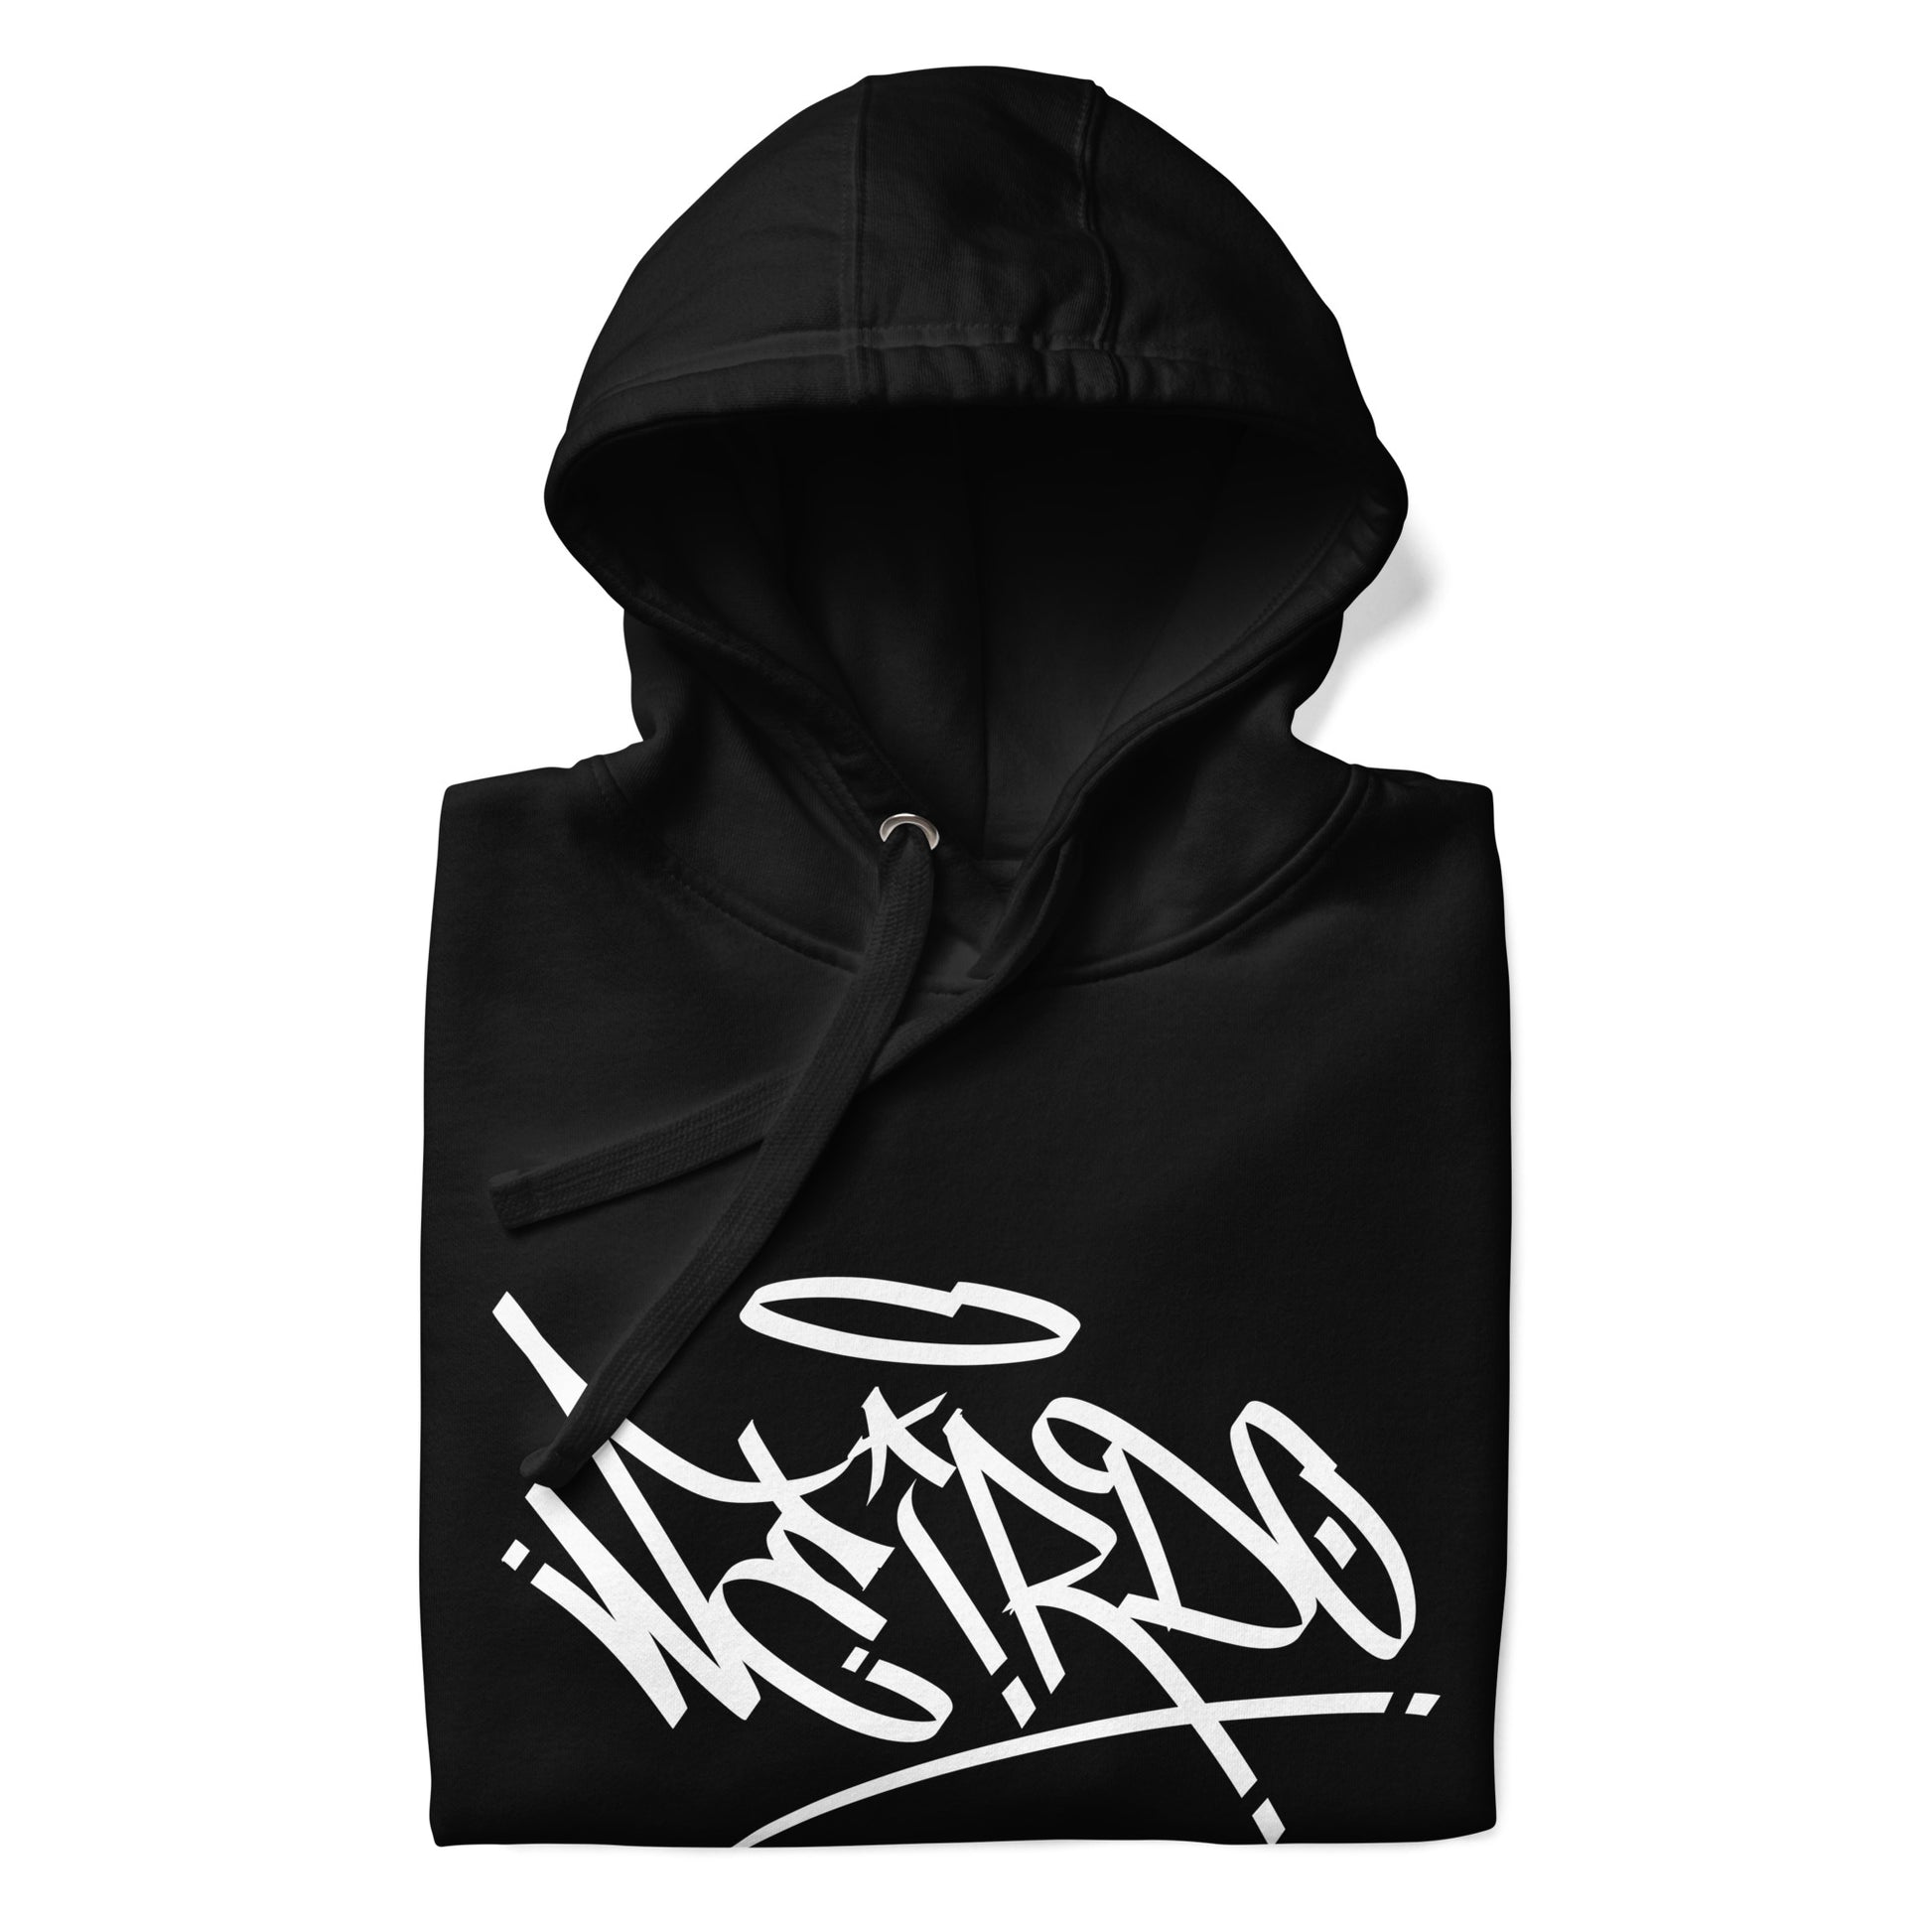 folded Weirdo Tag Hoodie black by B.Different Clothing street art graffiti inspired streetwear brand